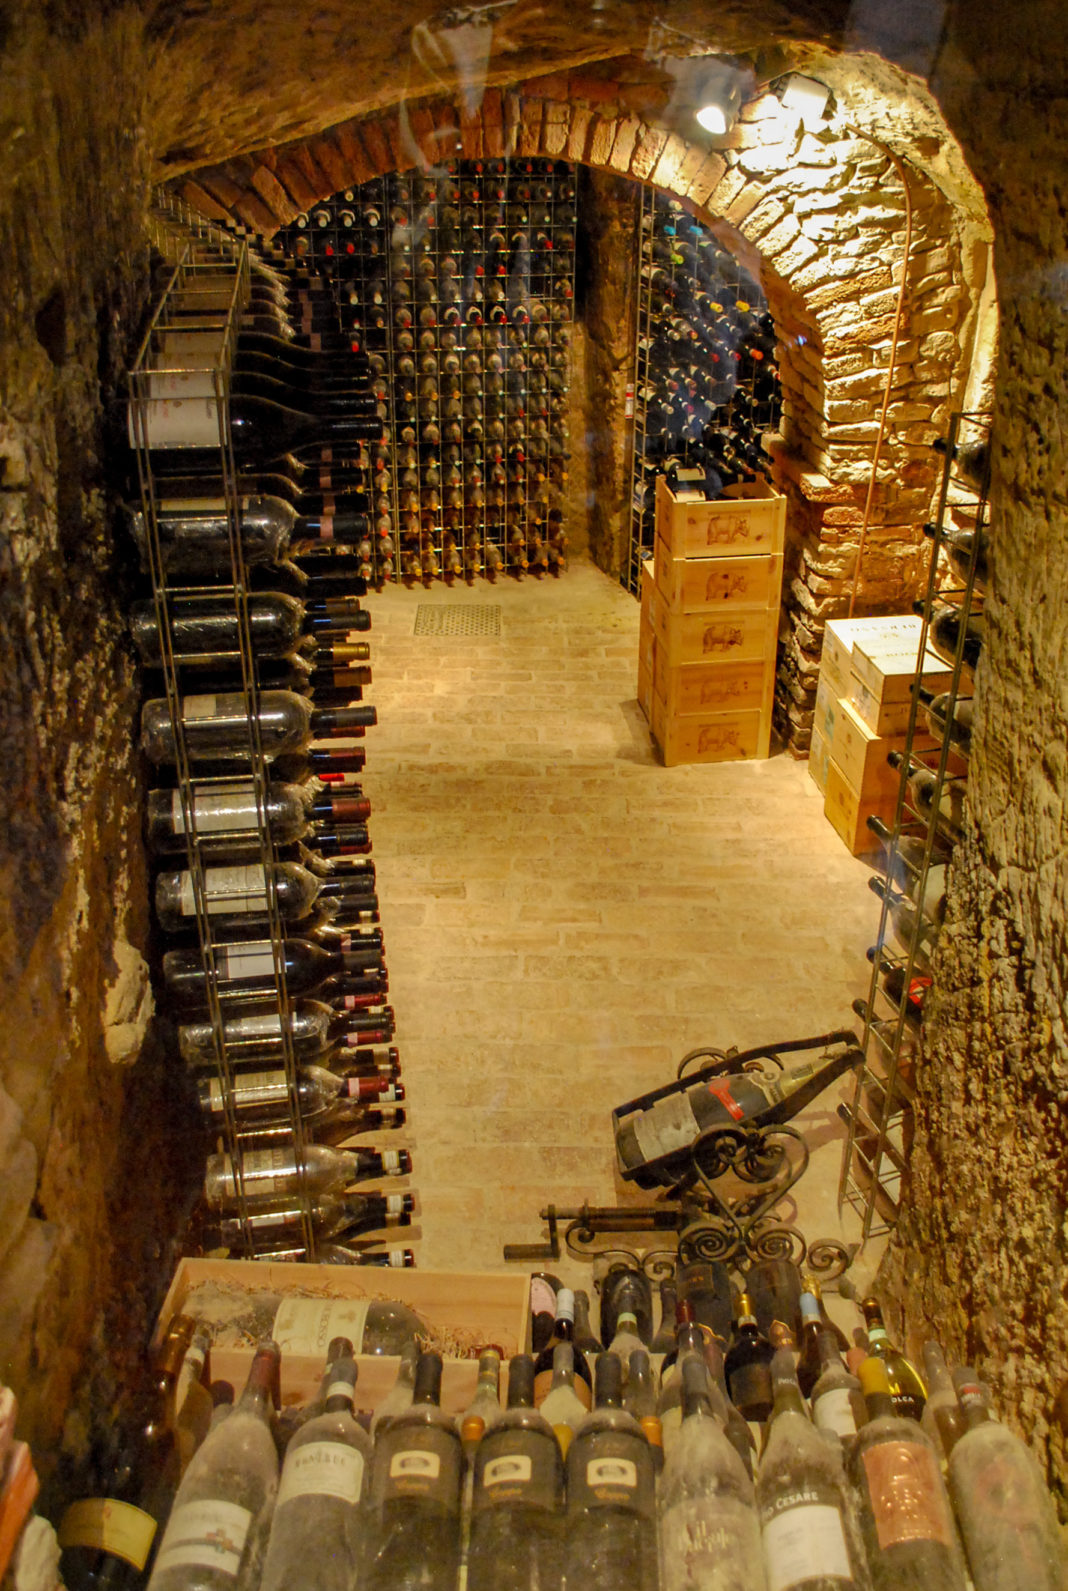 Wine bottles in the wine cellar